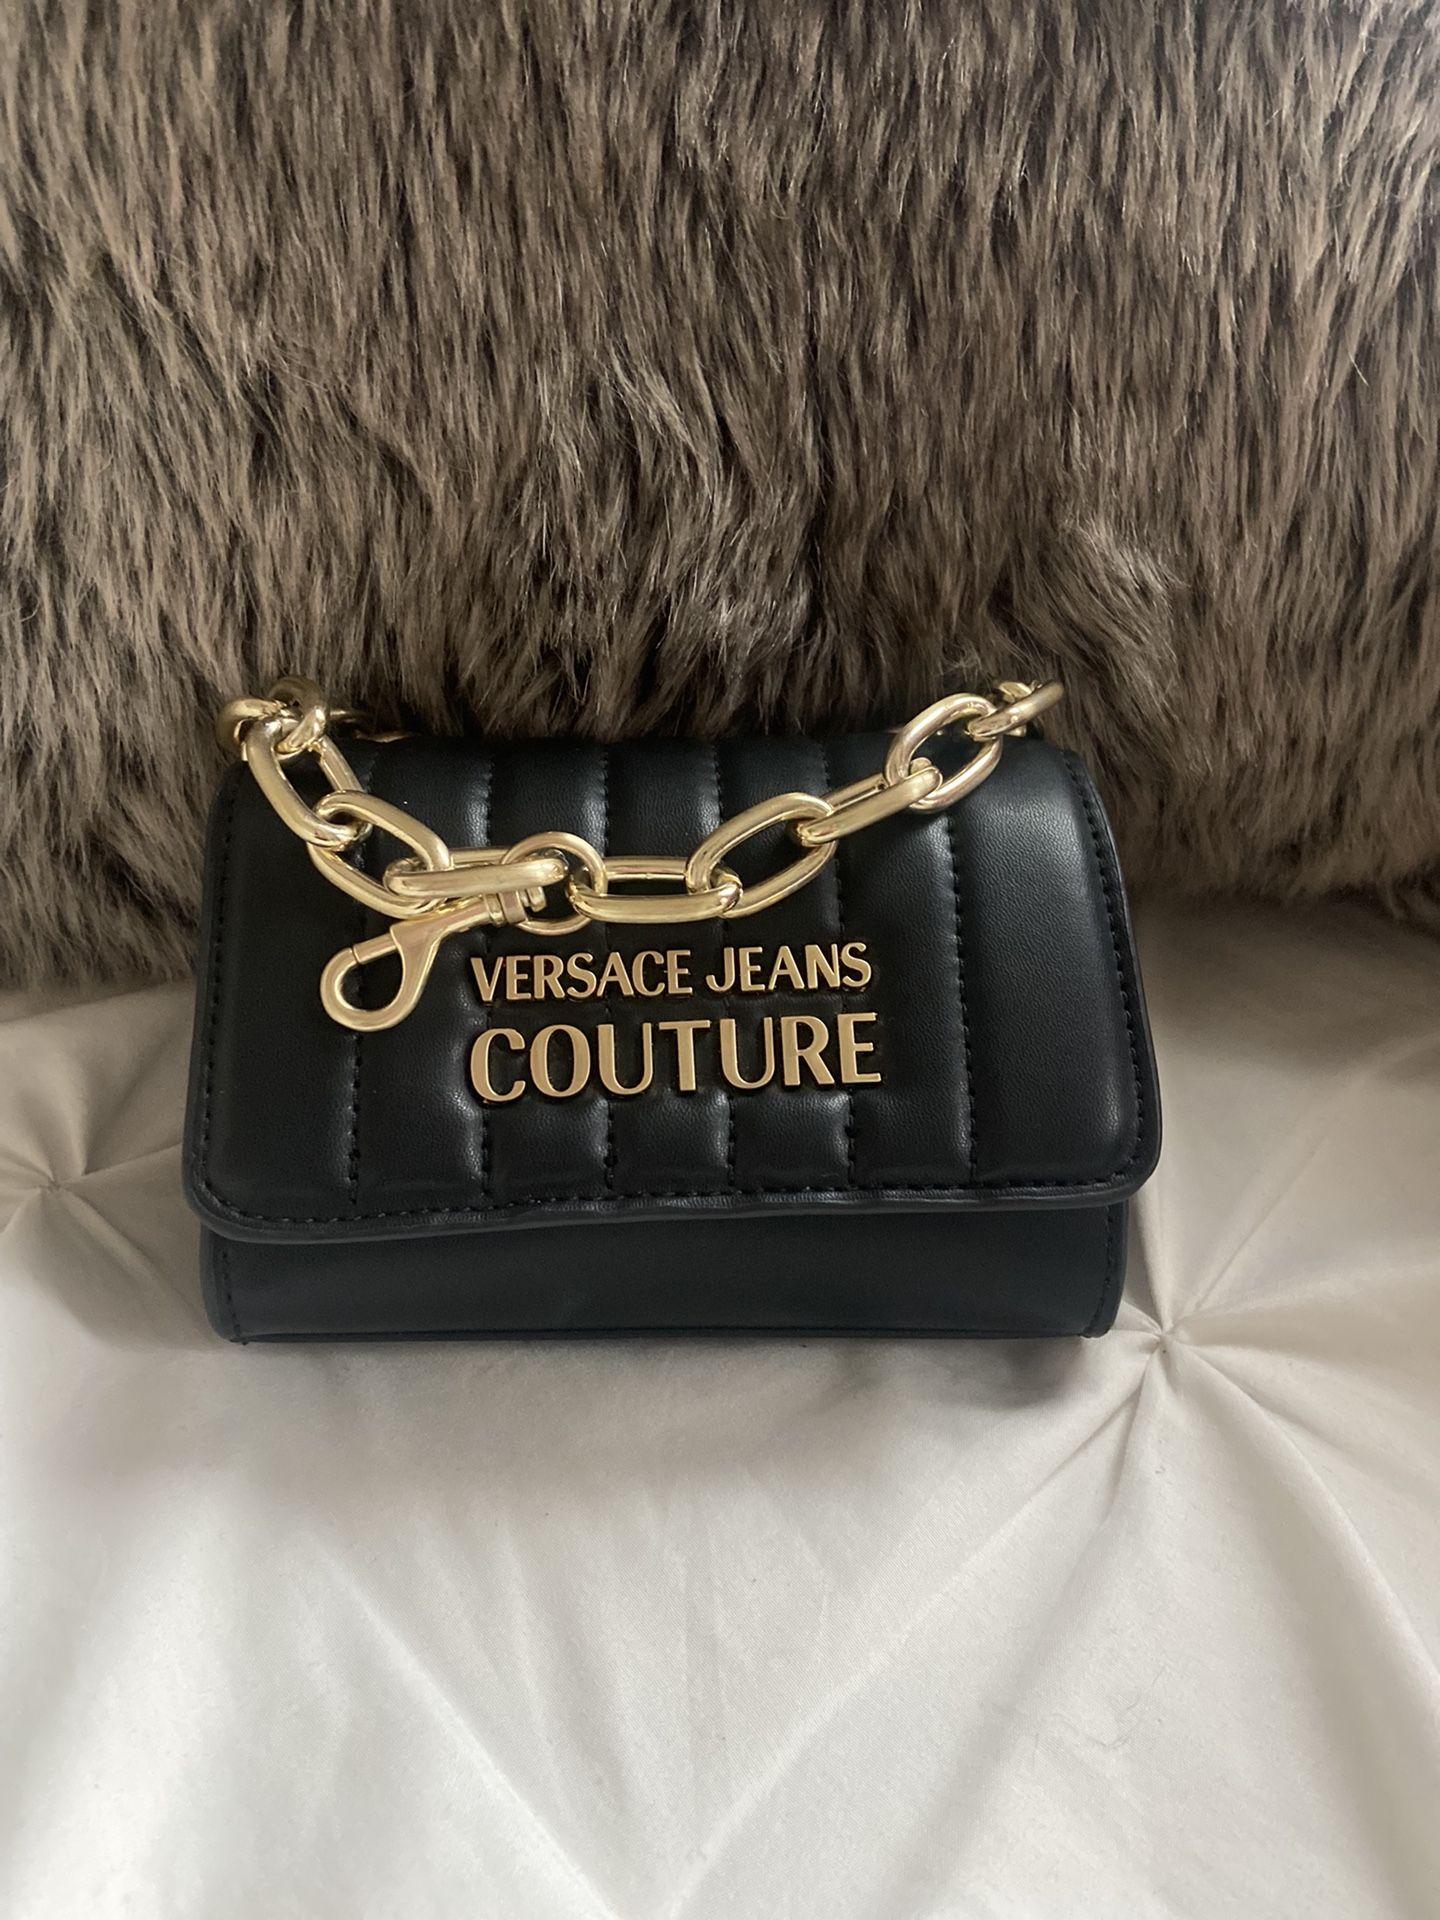 Versace belt bag/clutch